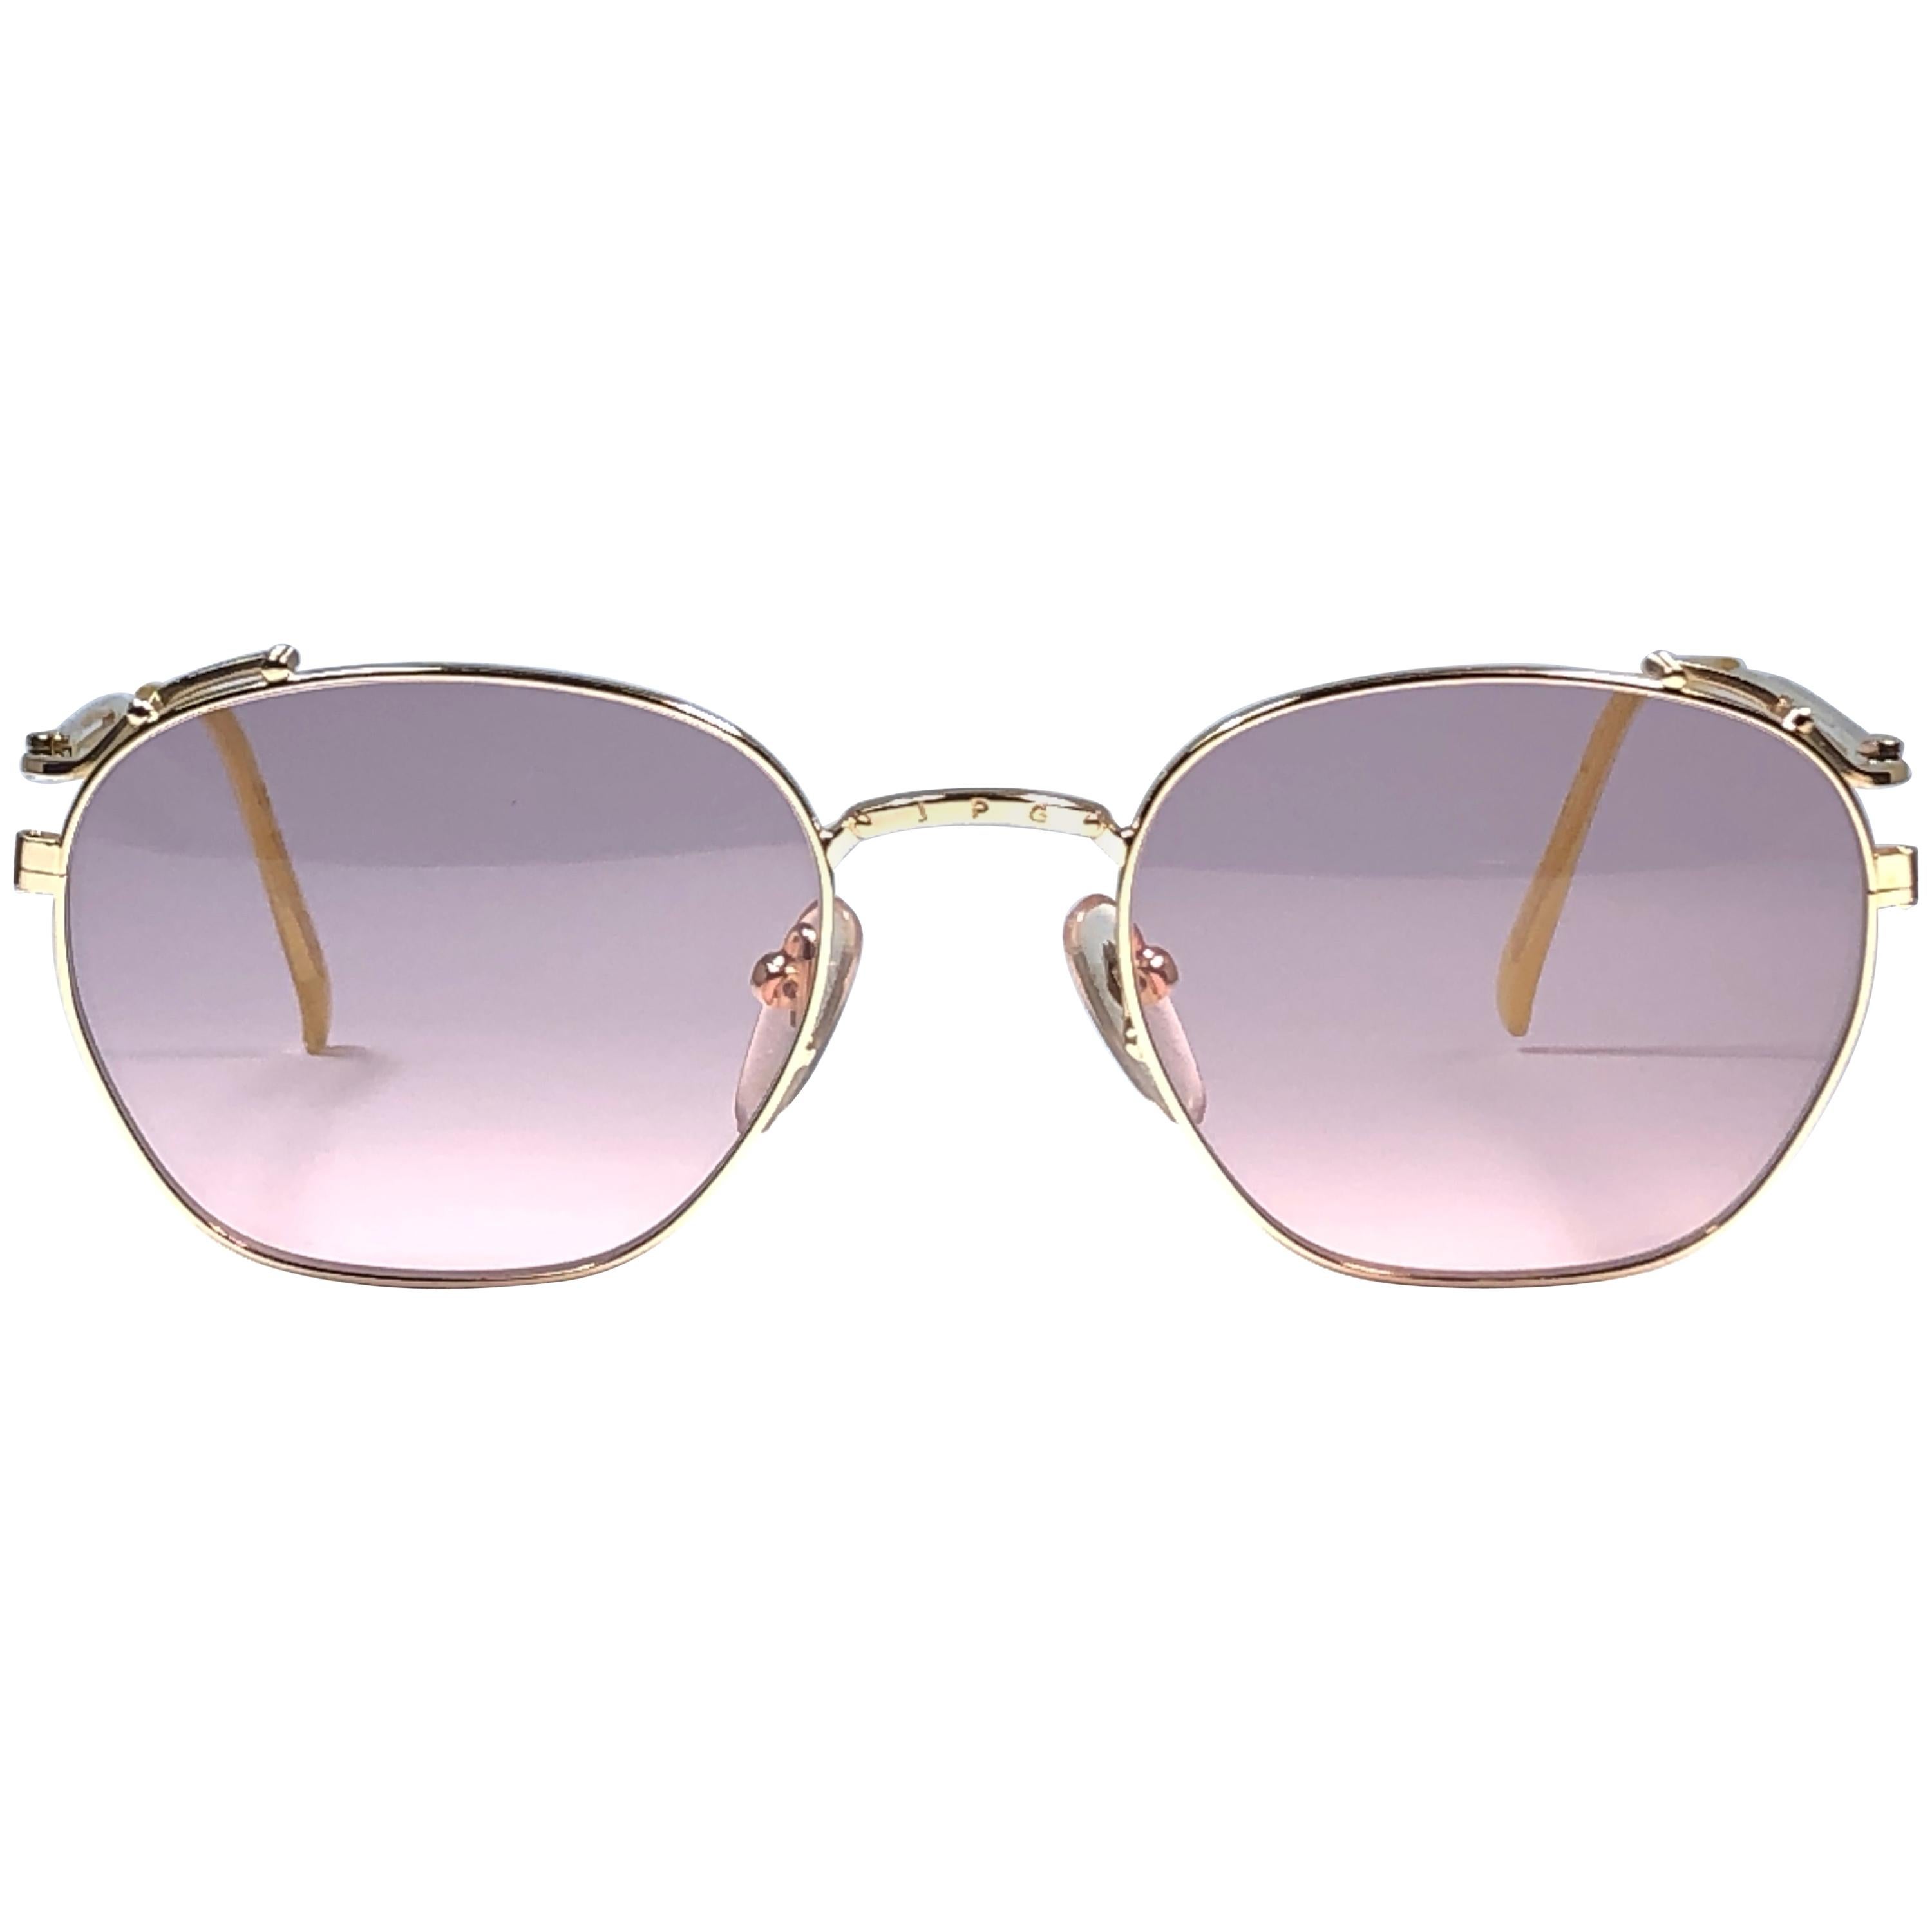 New Jean Paul Gaultier 55 3173 Gold Sunglasses 1990's Japan 